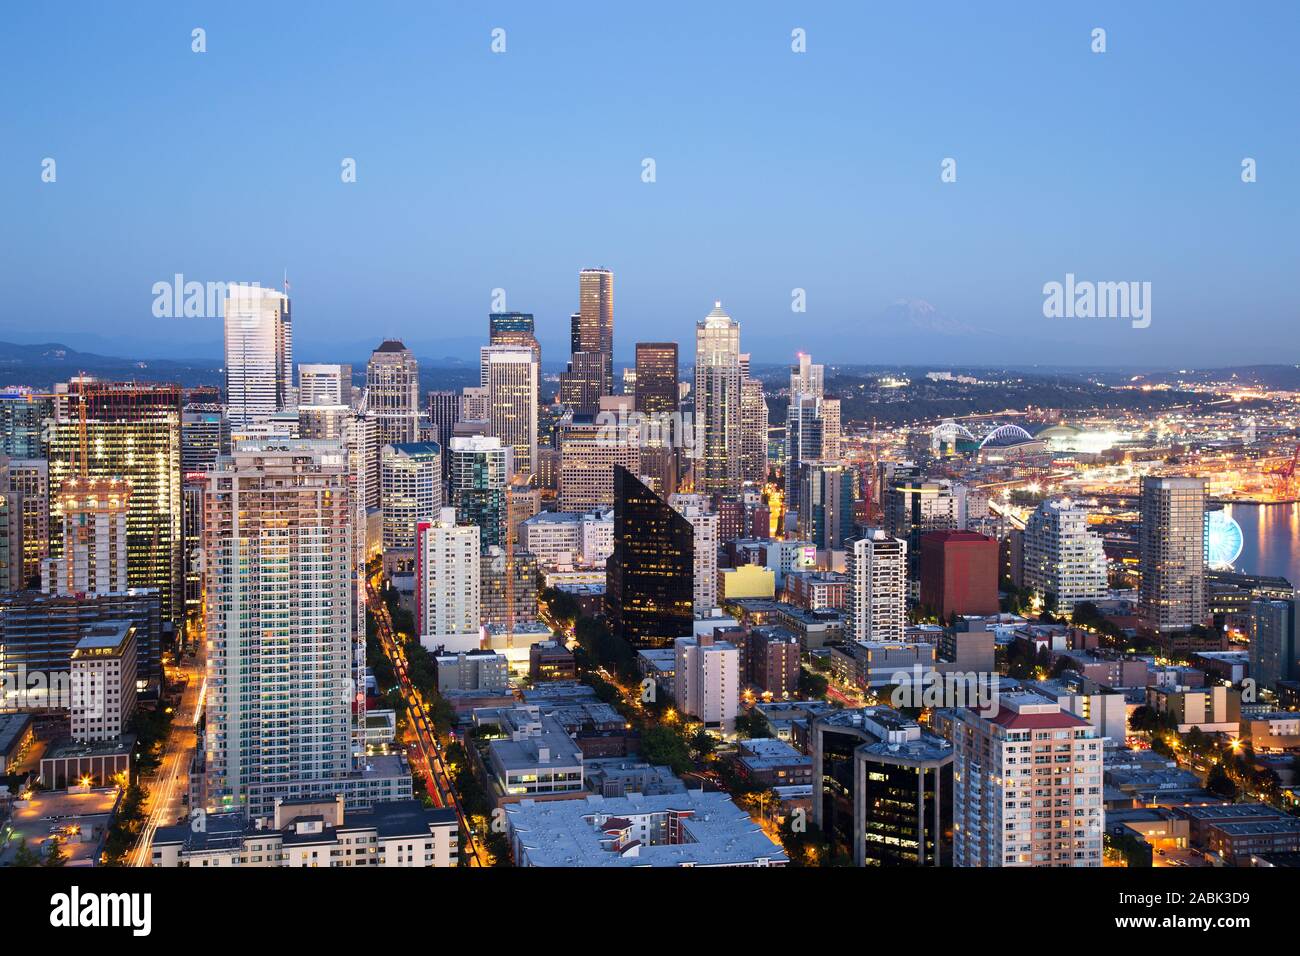 Parole chiave: Seattle, skyline, città, tower sky, tramonto, cityscape, Washington, blu, urban, crepuscolo, grattacielo, suono, downtown, panorama, architettura, t Foto Stock